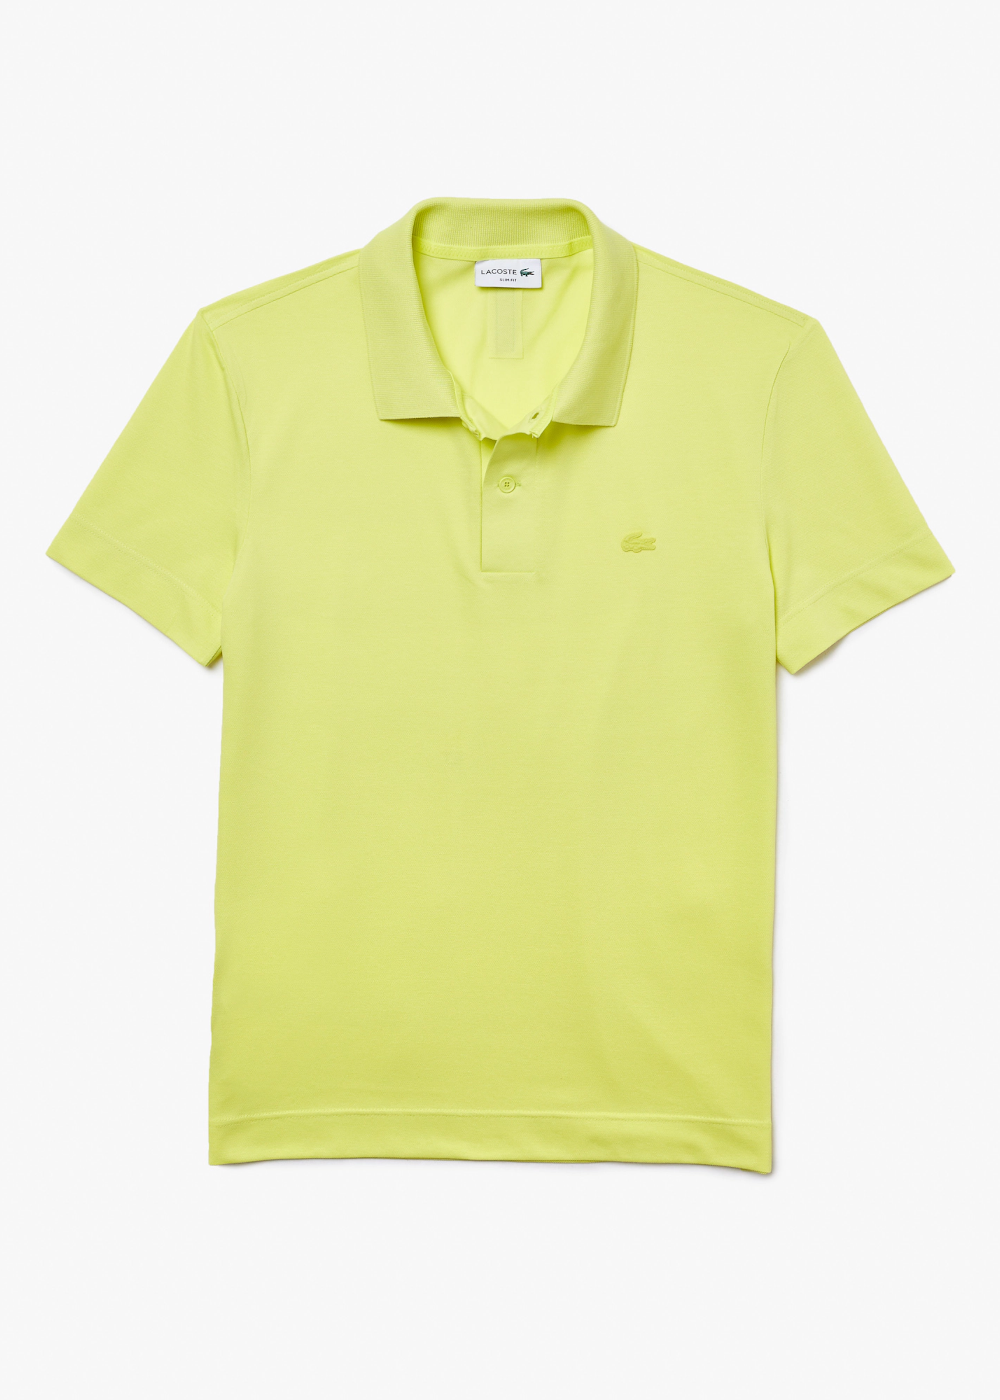 Lacoste Sport TENNIS TOUR - T-shirt de sport - blanc/jaune fluo/vert/blanc  